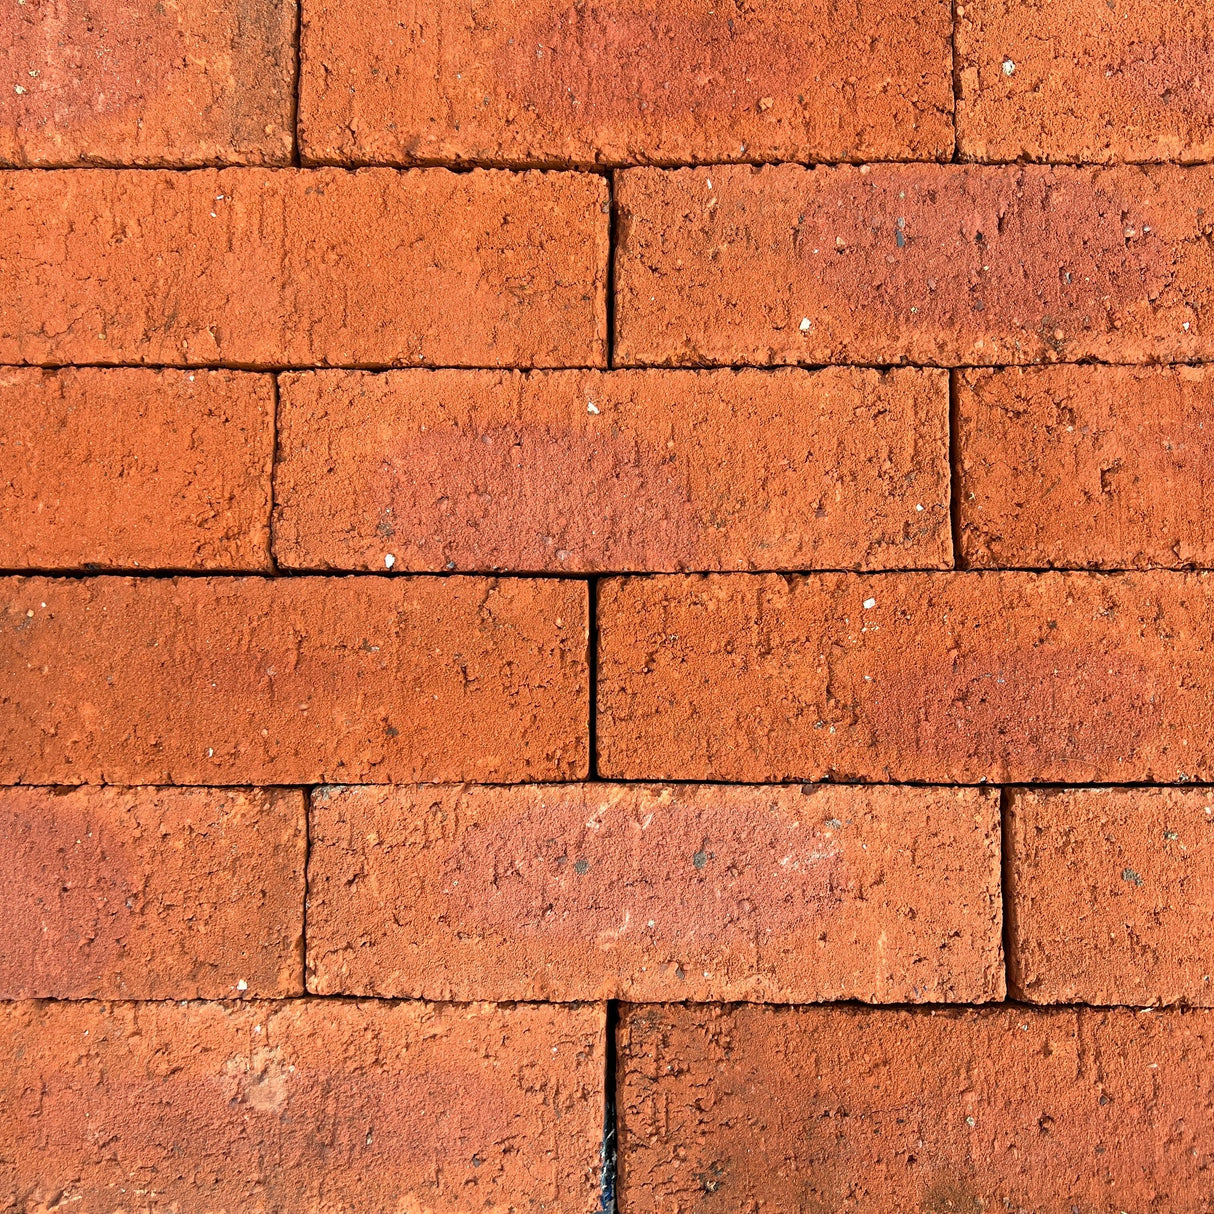 65mm Red Rustic Facing Bricks - New - Reclaimed Brick Company